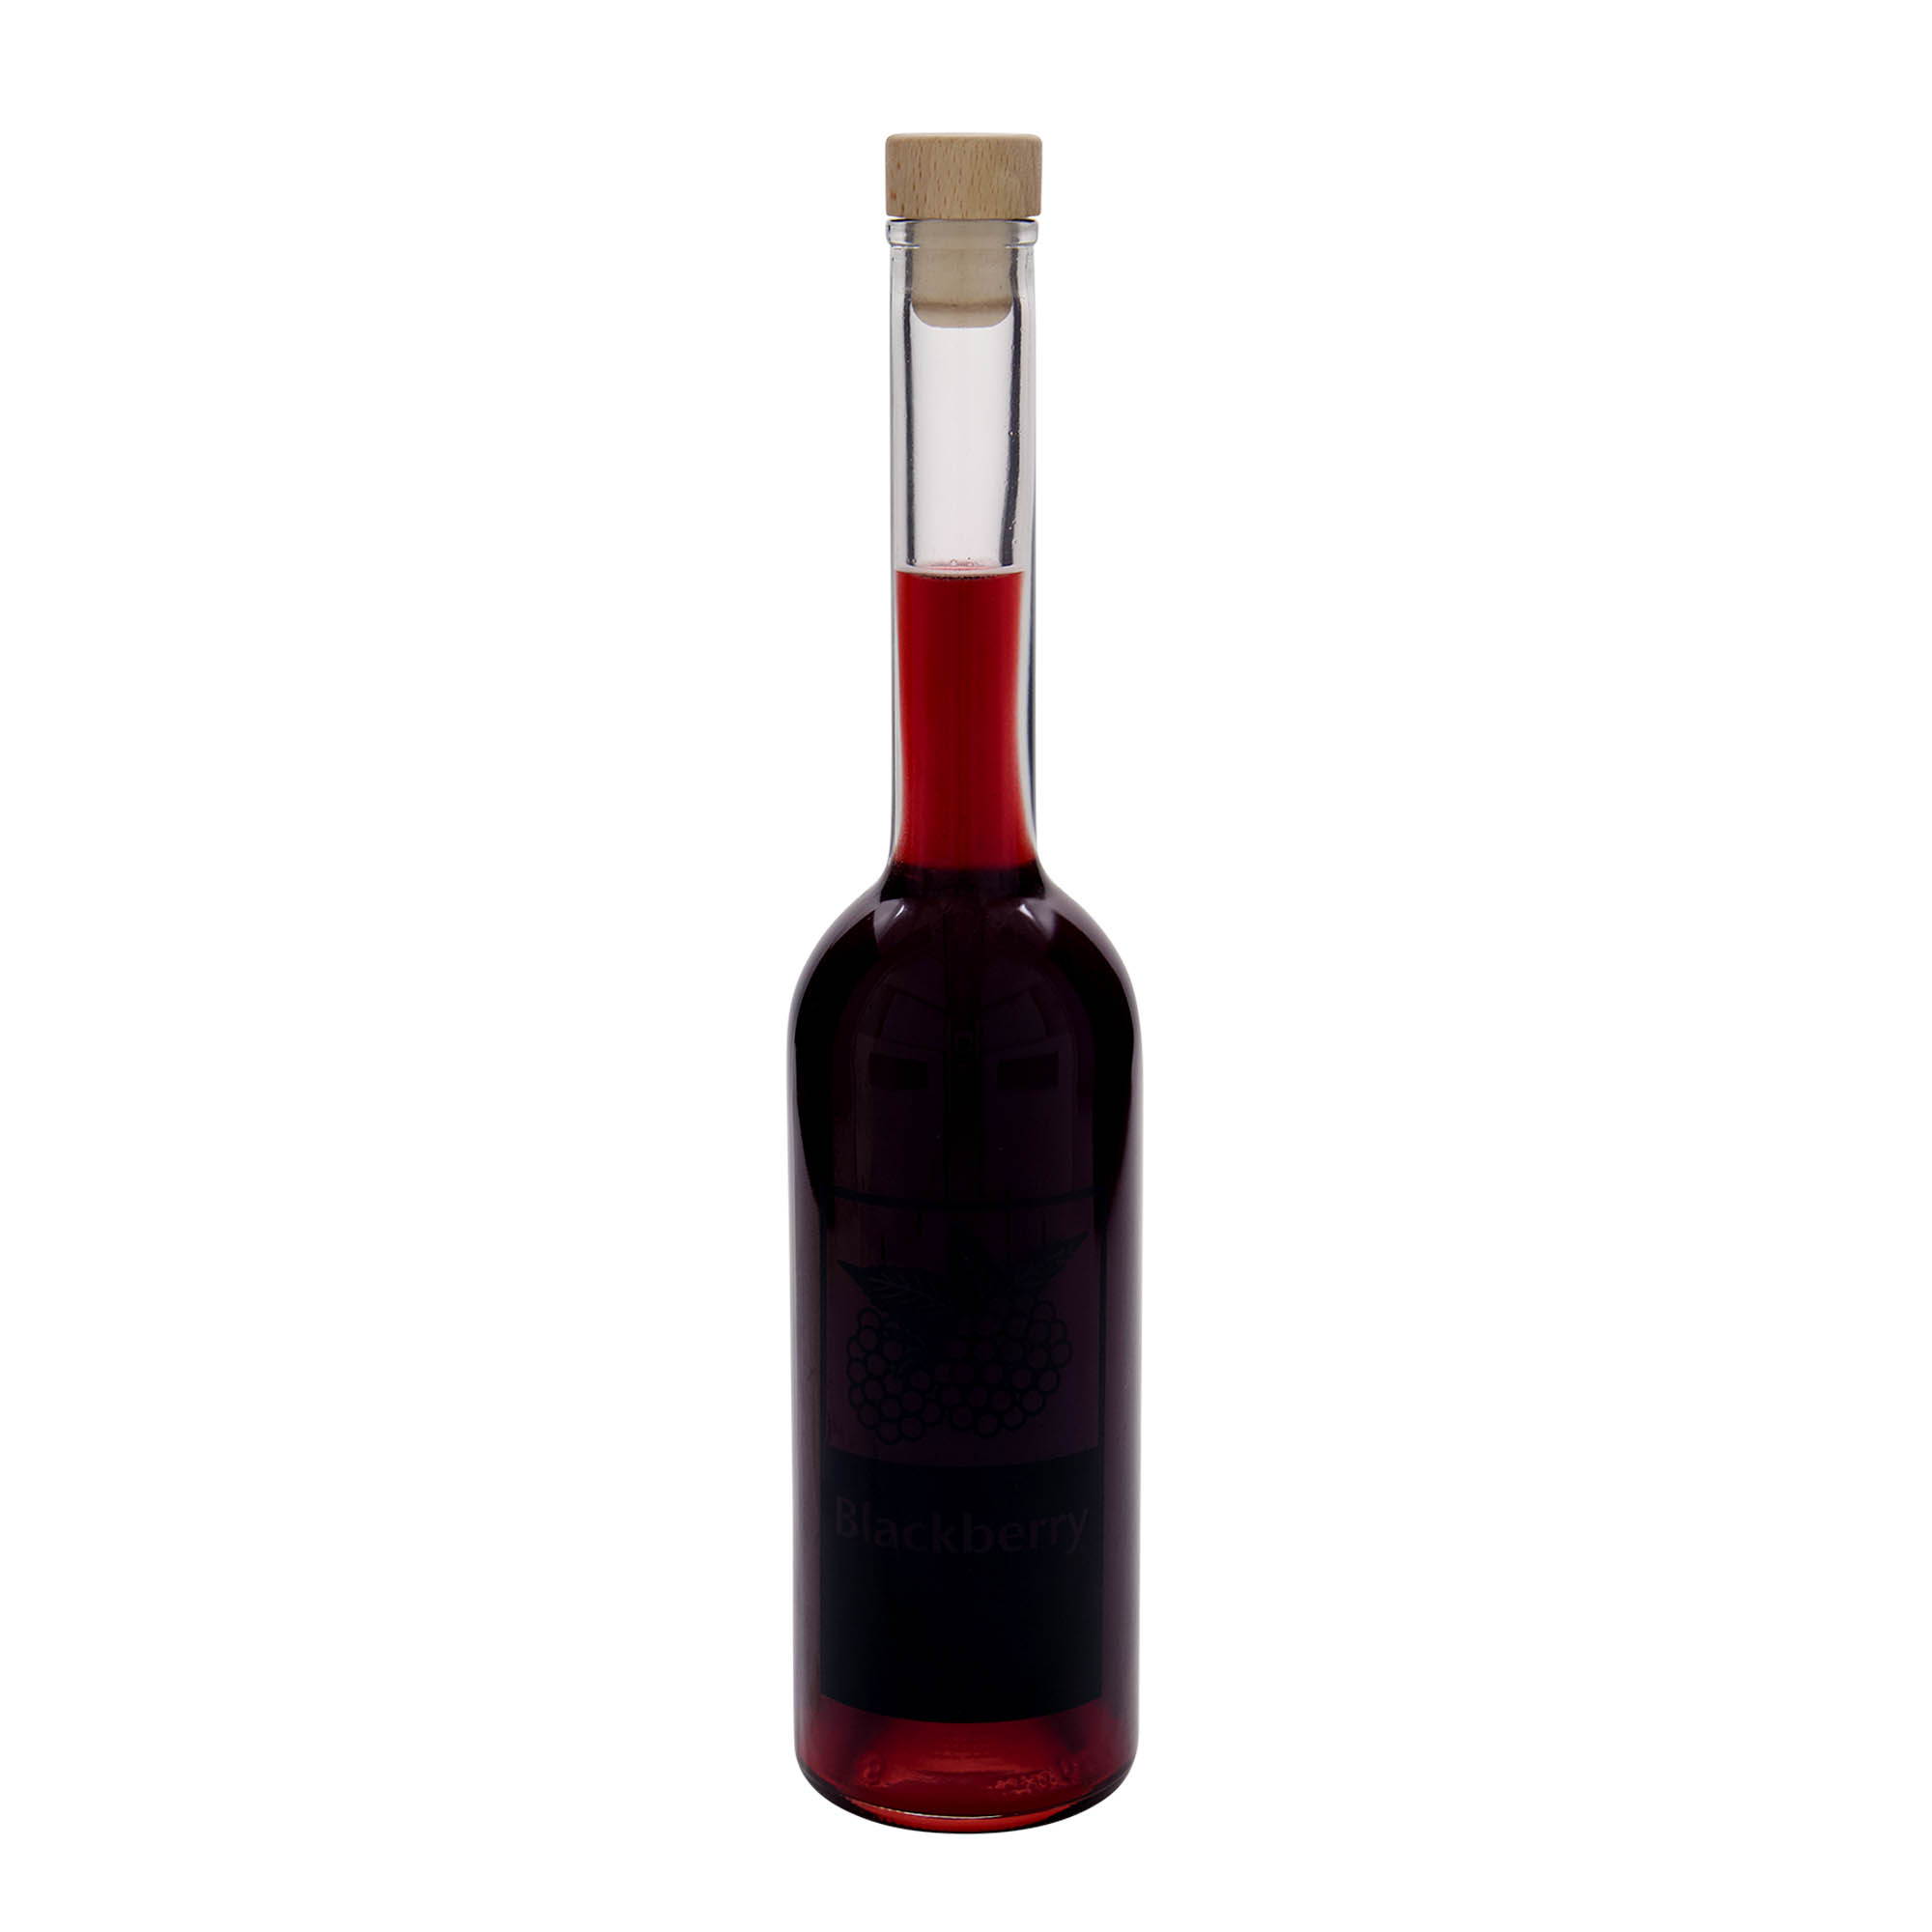 500 ml glass bottle 'Opera', print: Blackberry, closure: cork